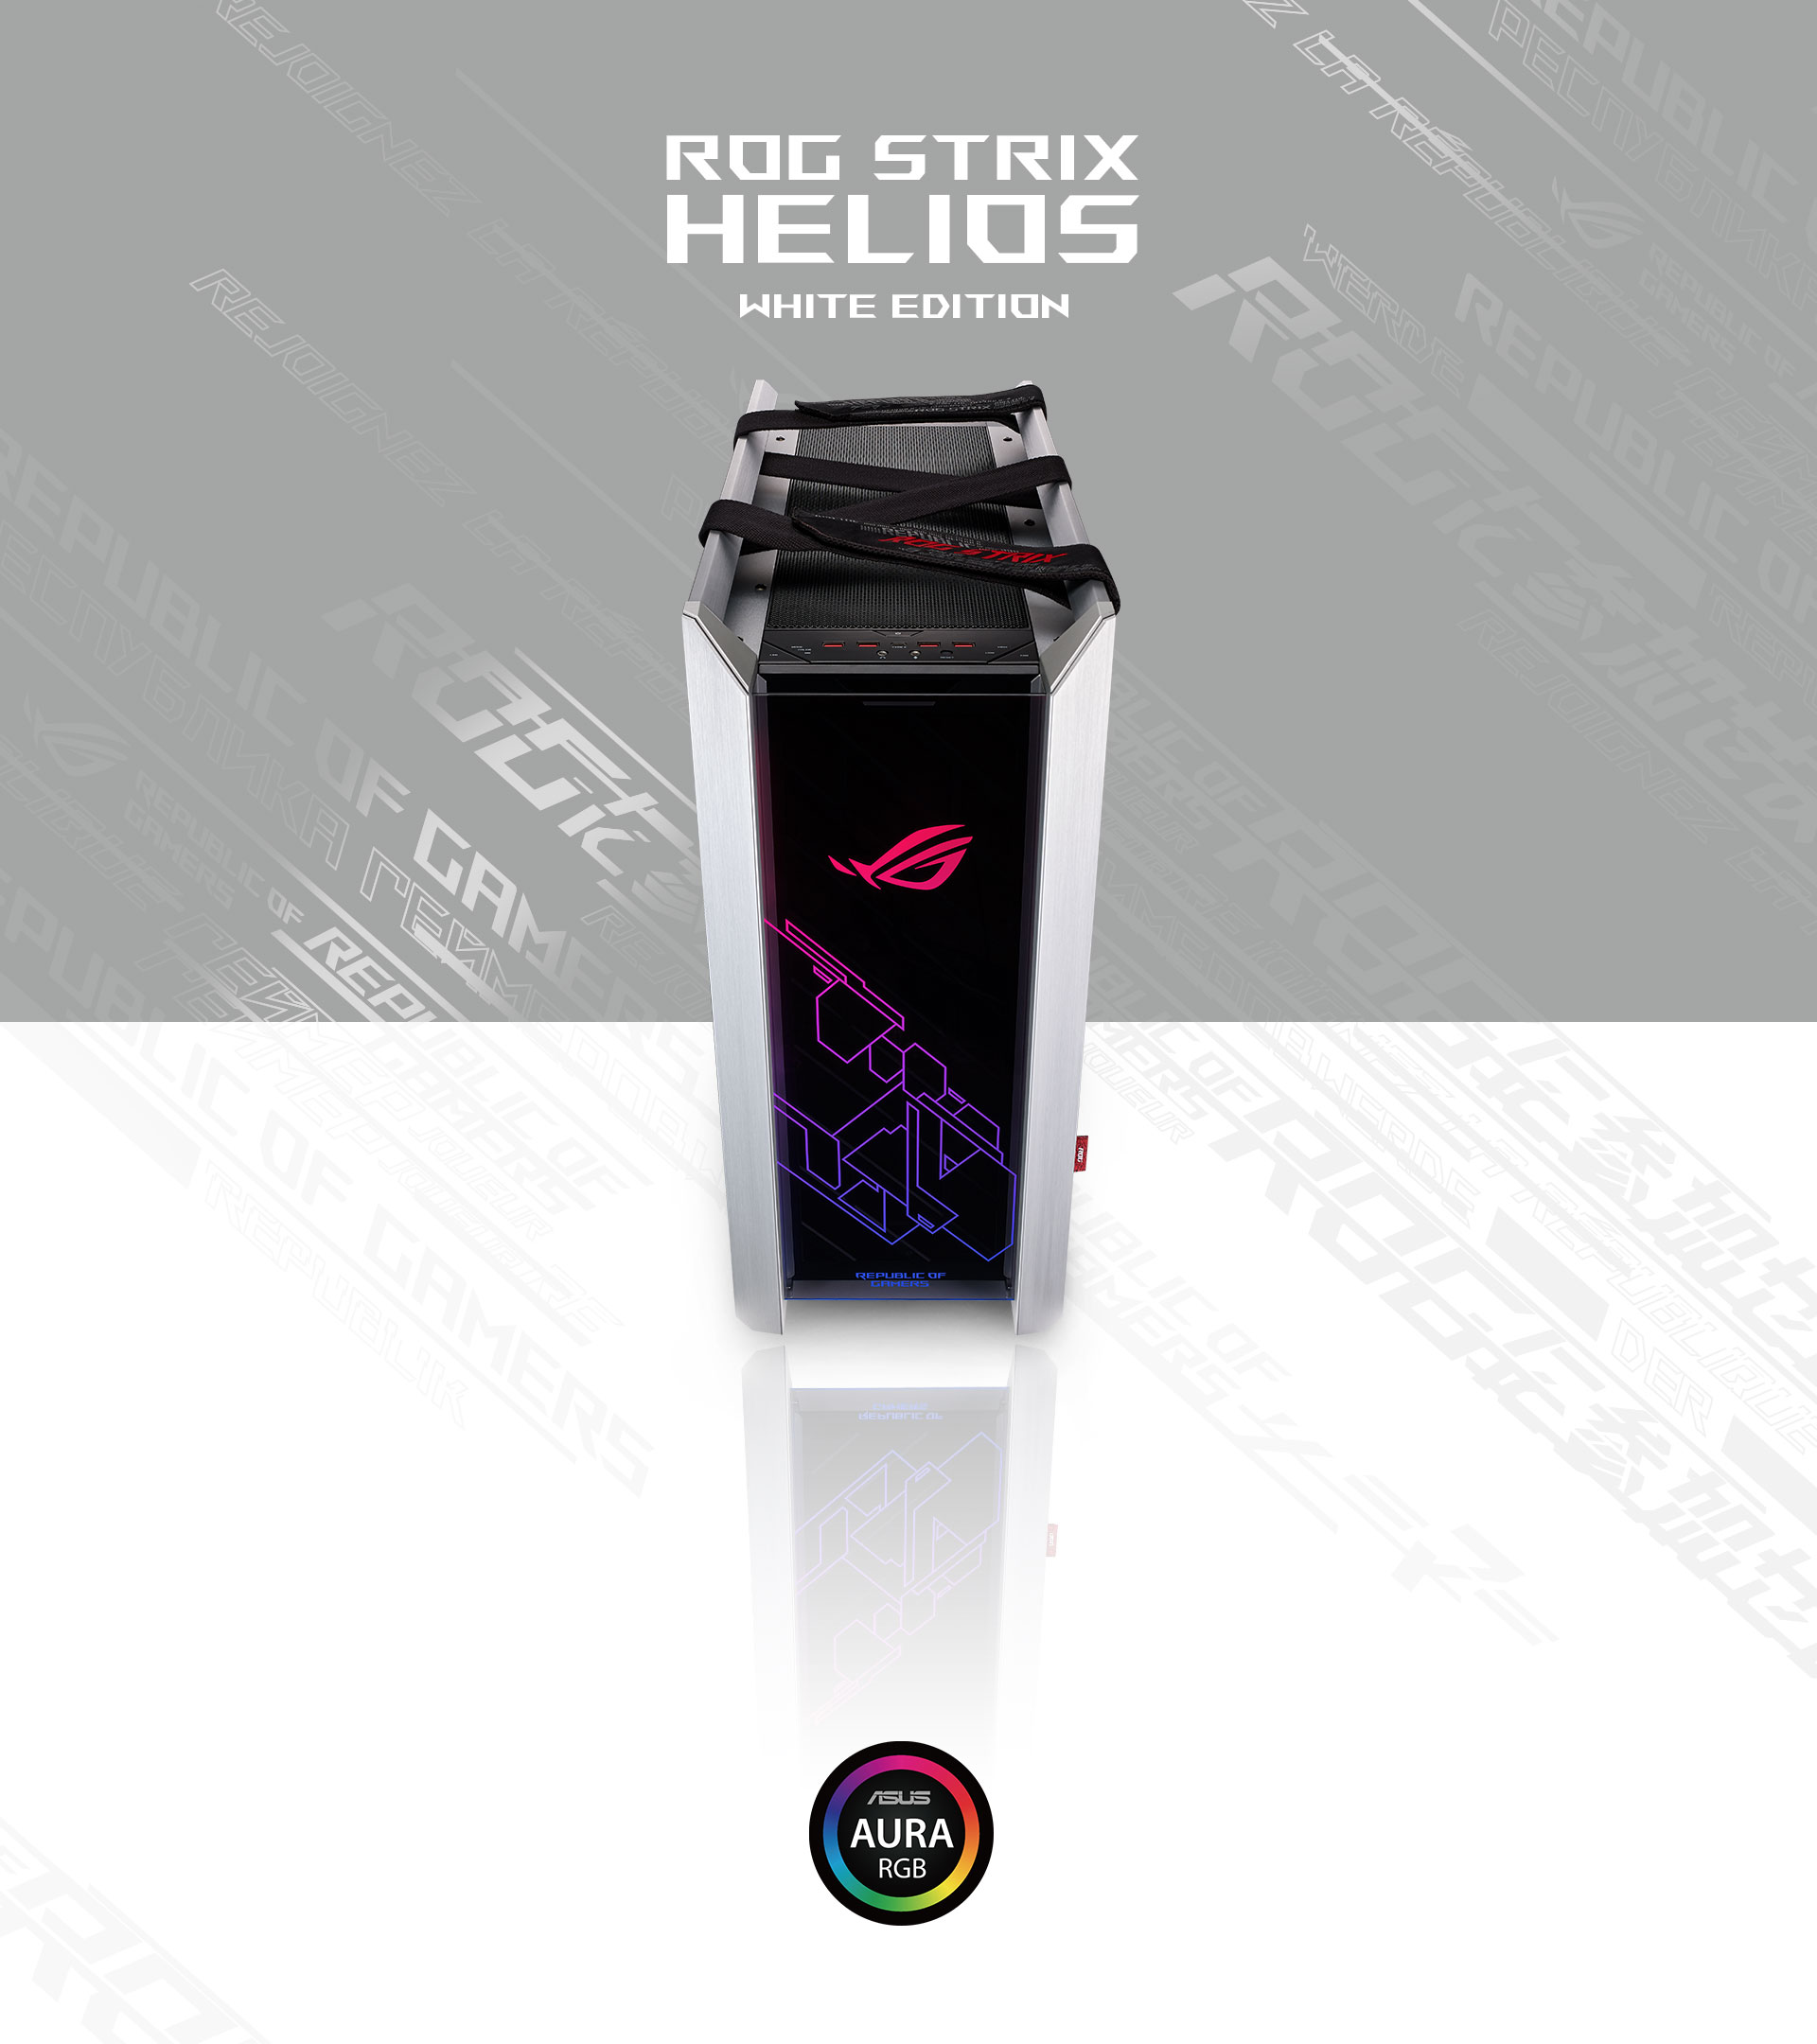 ROG Strix Helios White Edition top view and Aura RGB logo